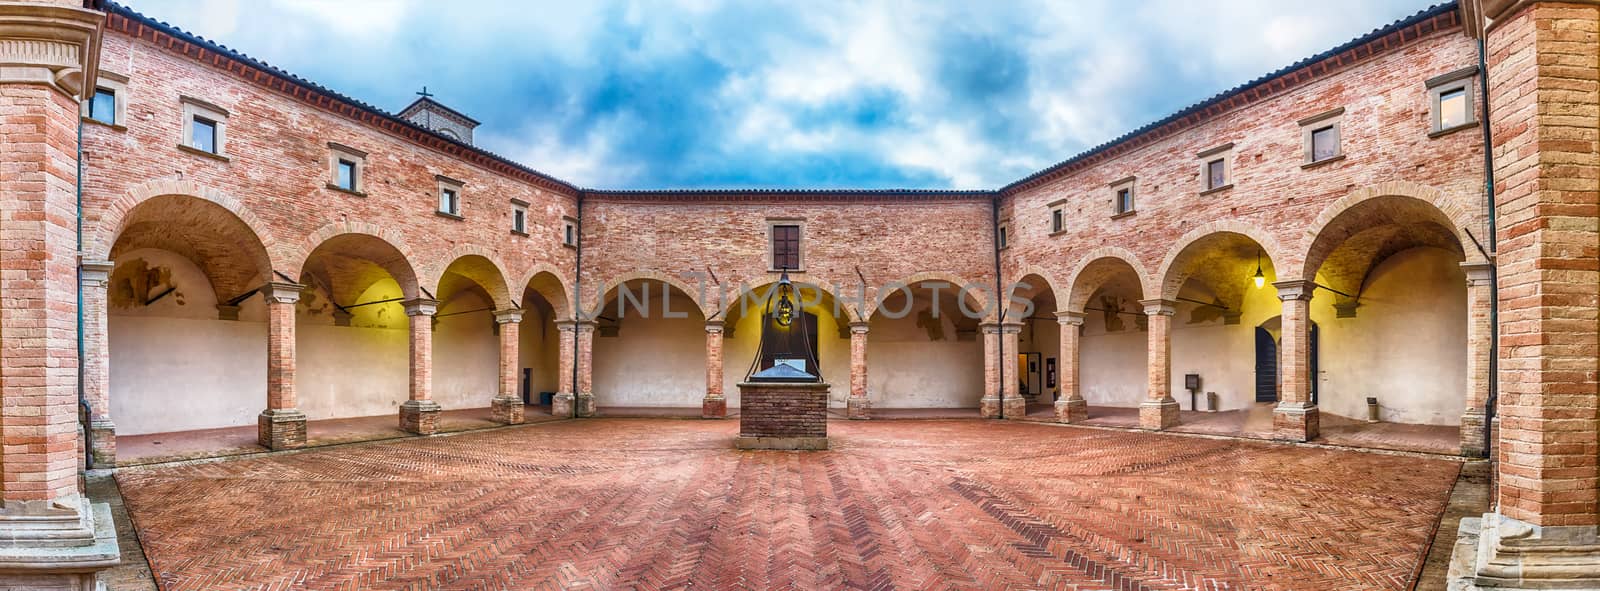 Ancient cloister of the Basilica of Saint Ubaldo, Gubbio, Italy by marcorubino